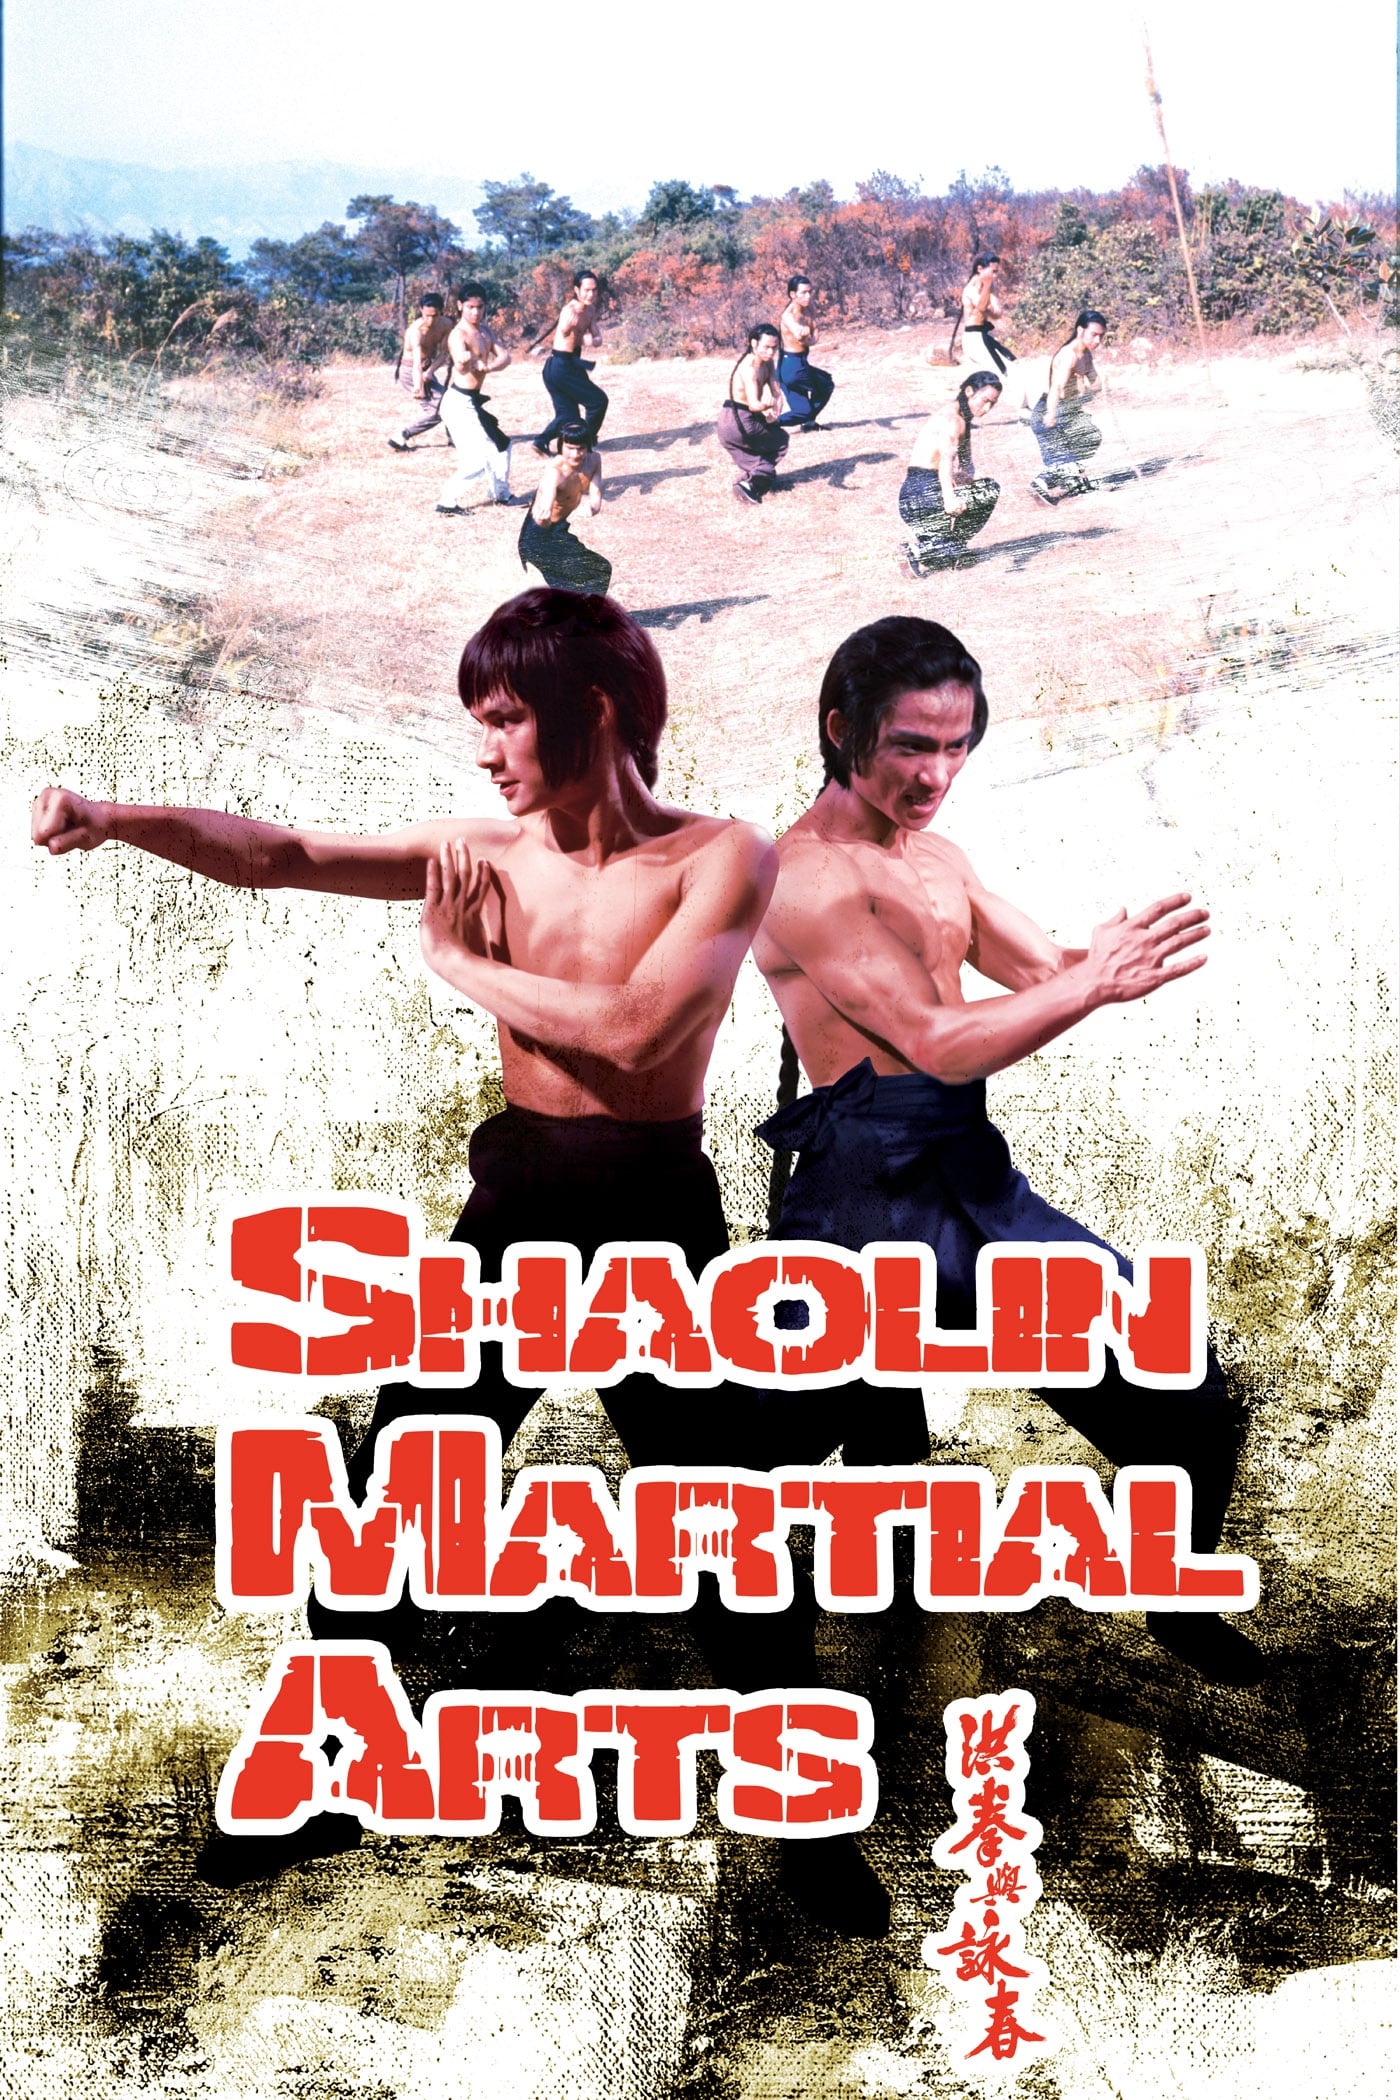 Shaolin Martial Arts (1974)